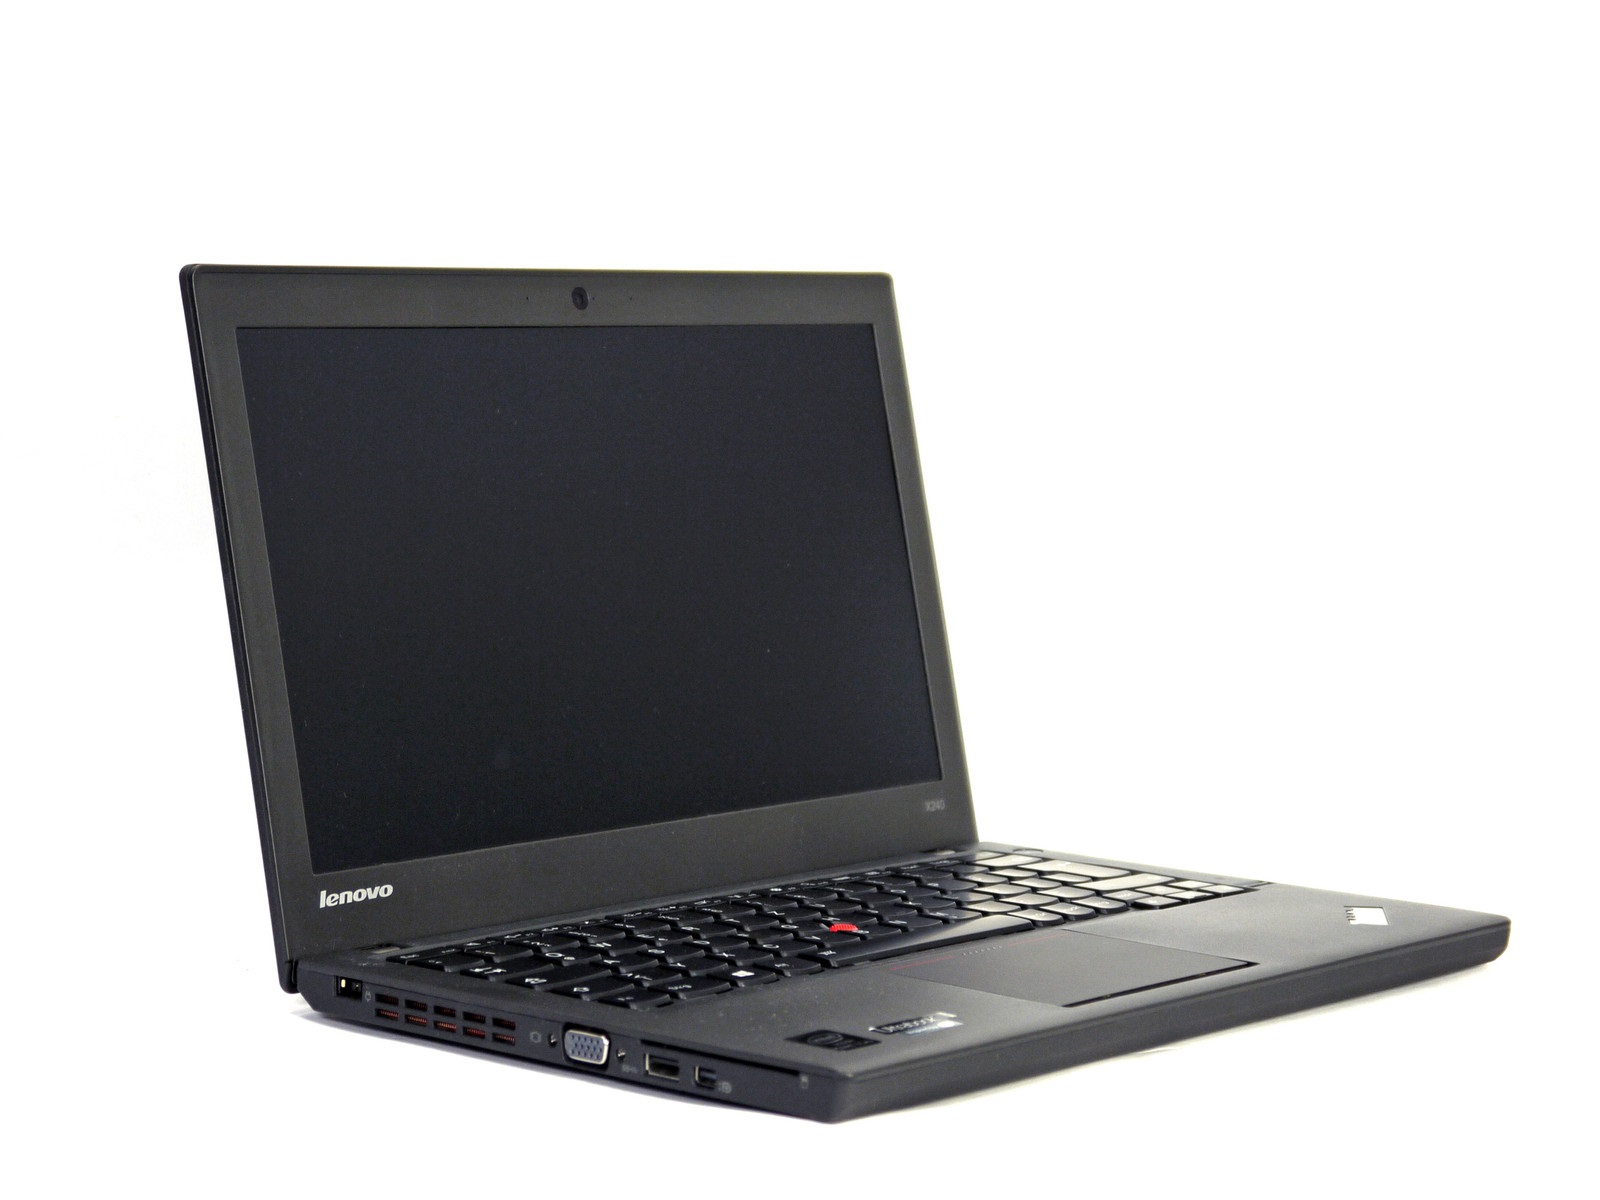 Lenovo thinkpad x240 notebookcheck hidpi m1